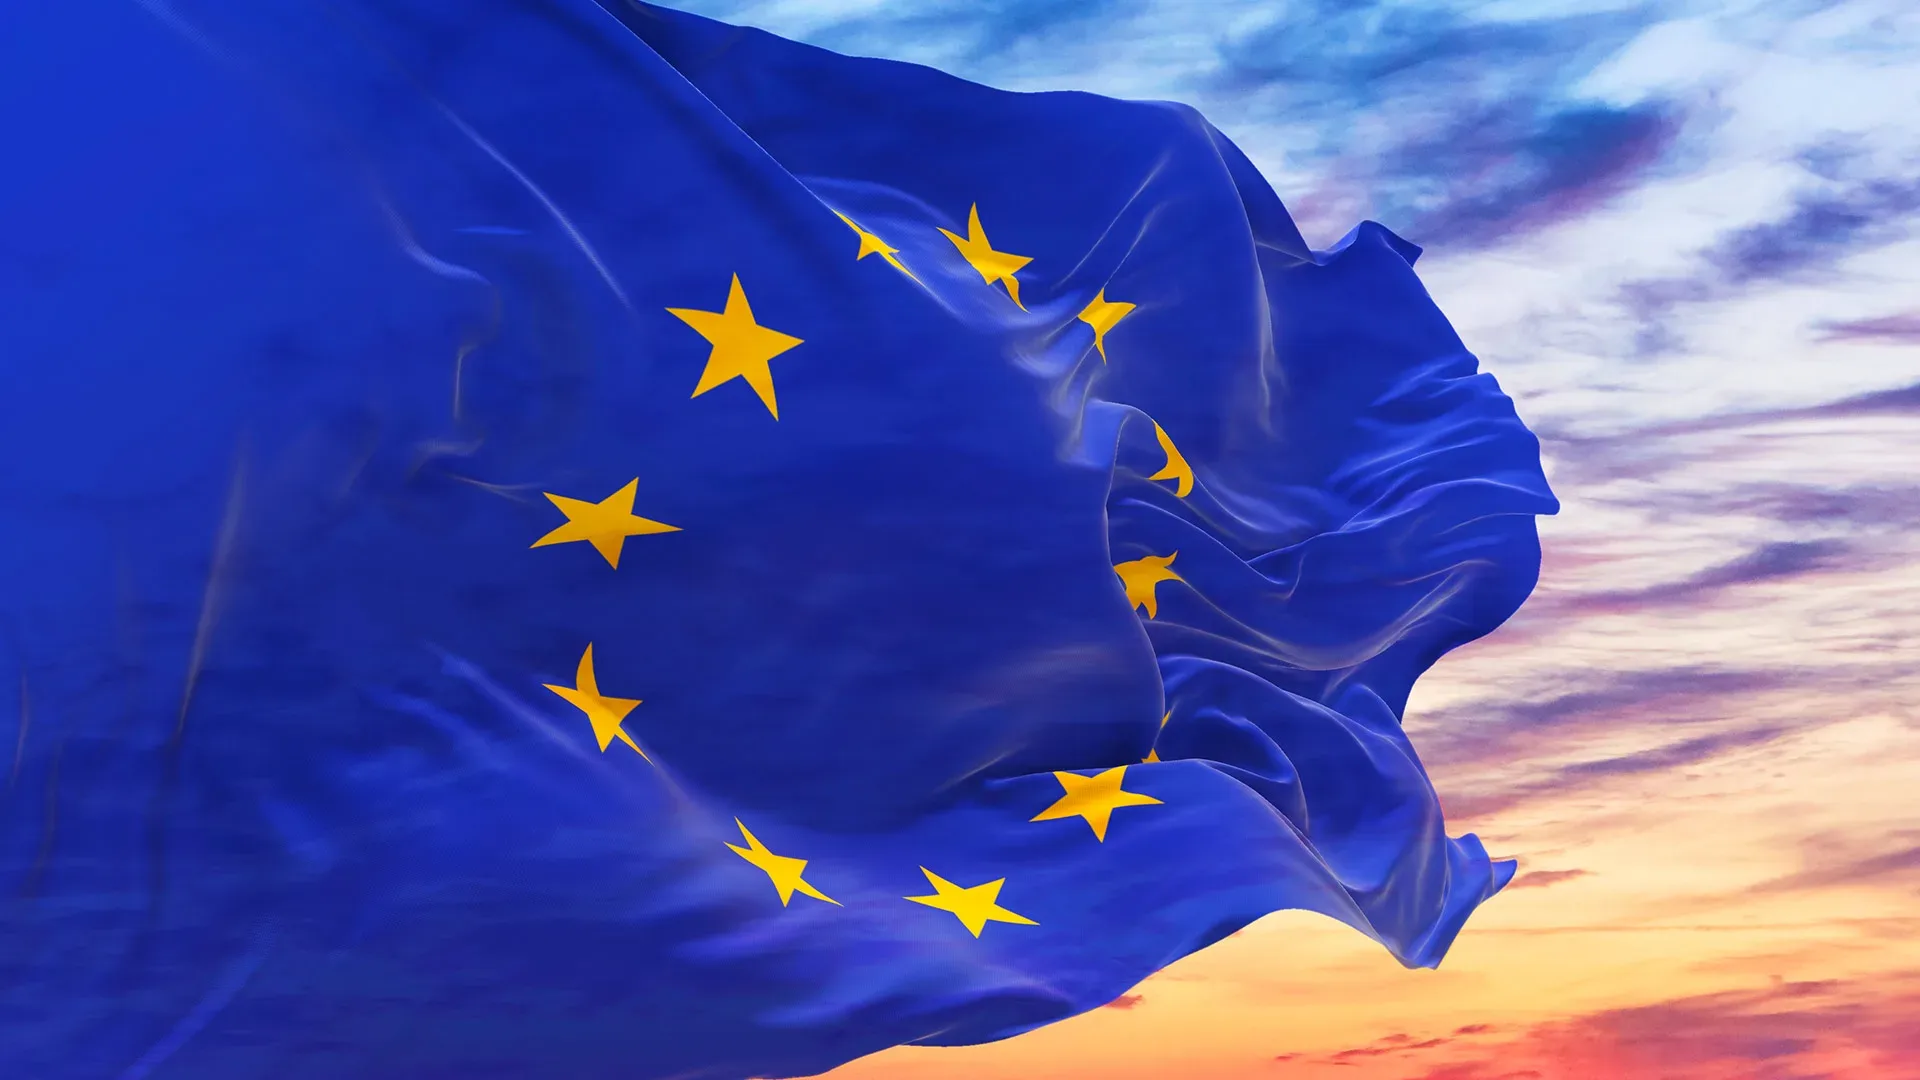 Geschichte der EU: Europäische Flagge - Organisationen - Gesellschaft -  Planet Wissen